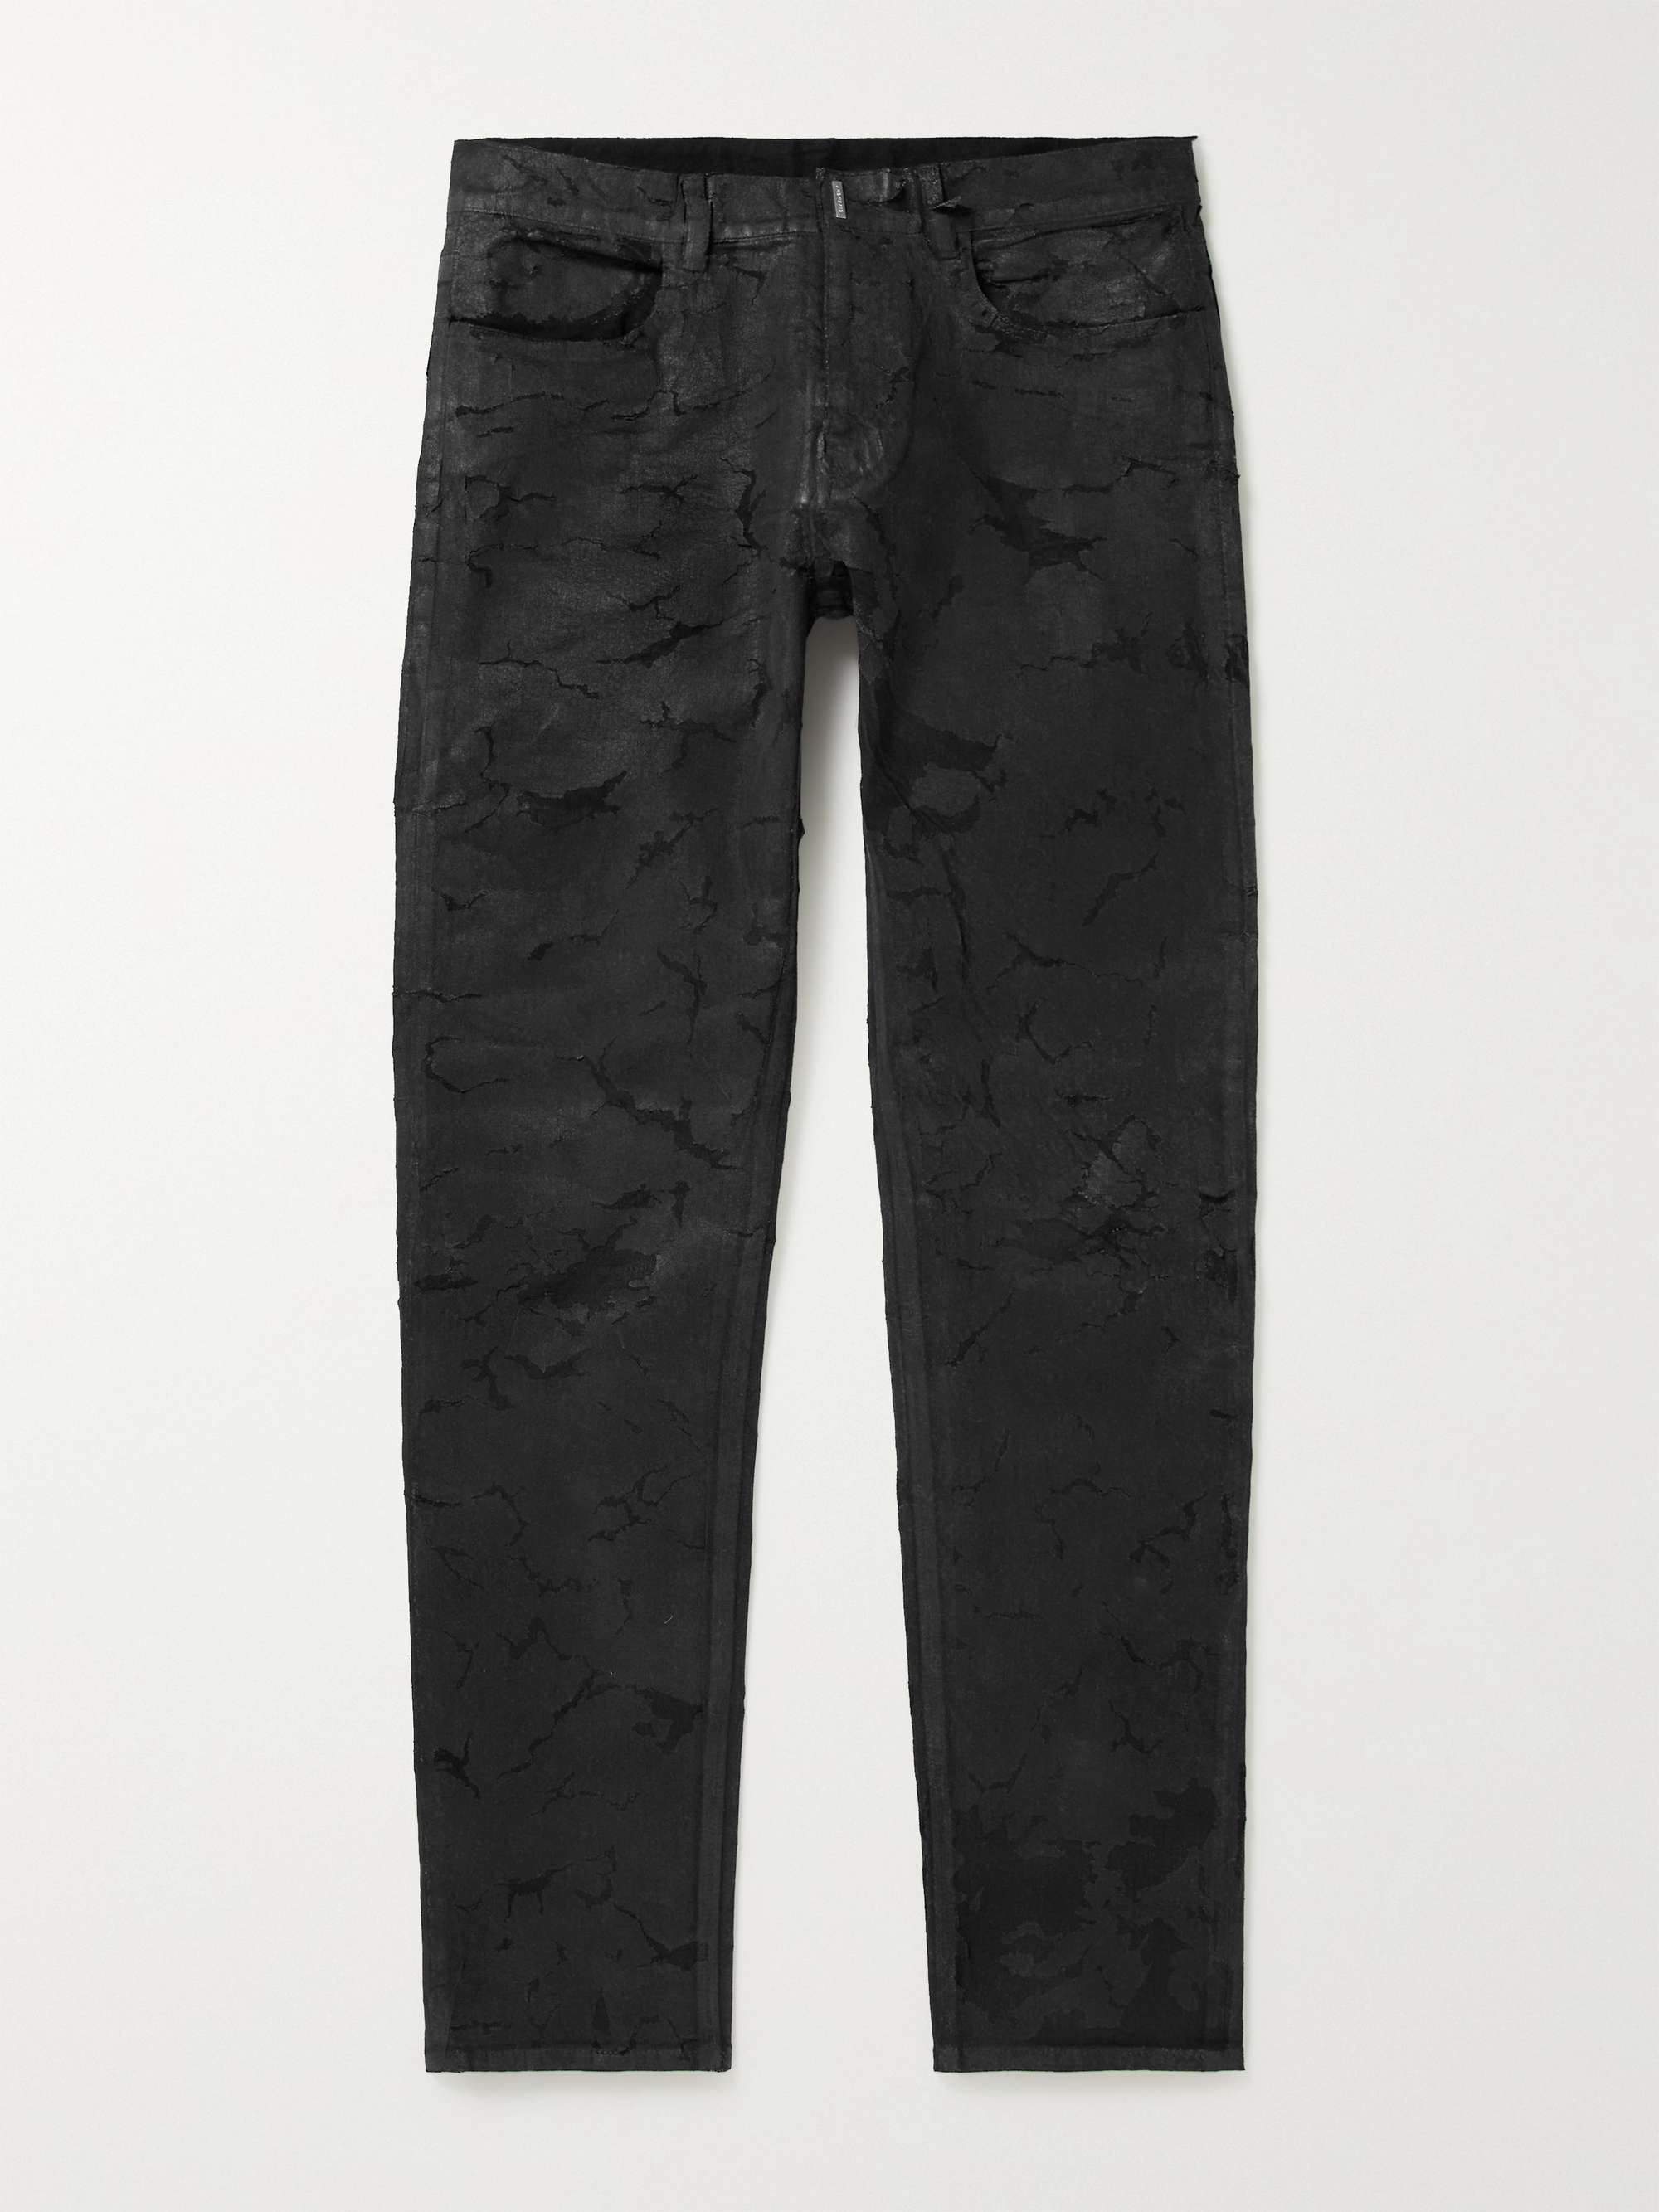 GIVENCHY Slim-Fit Distressed Coated Jeans for Men | MR PORTER